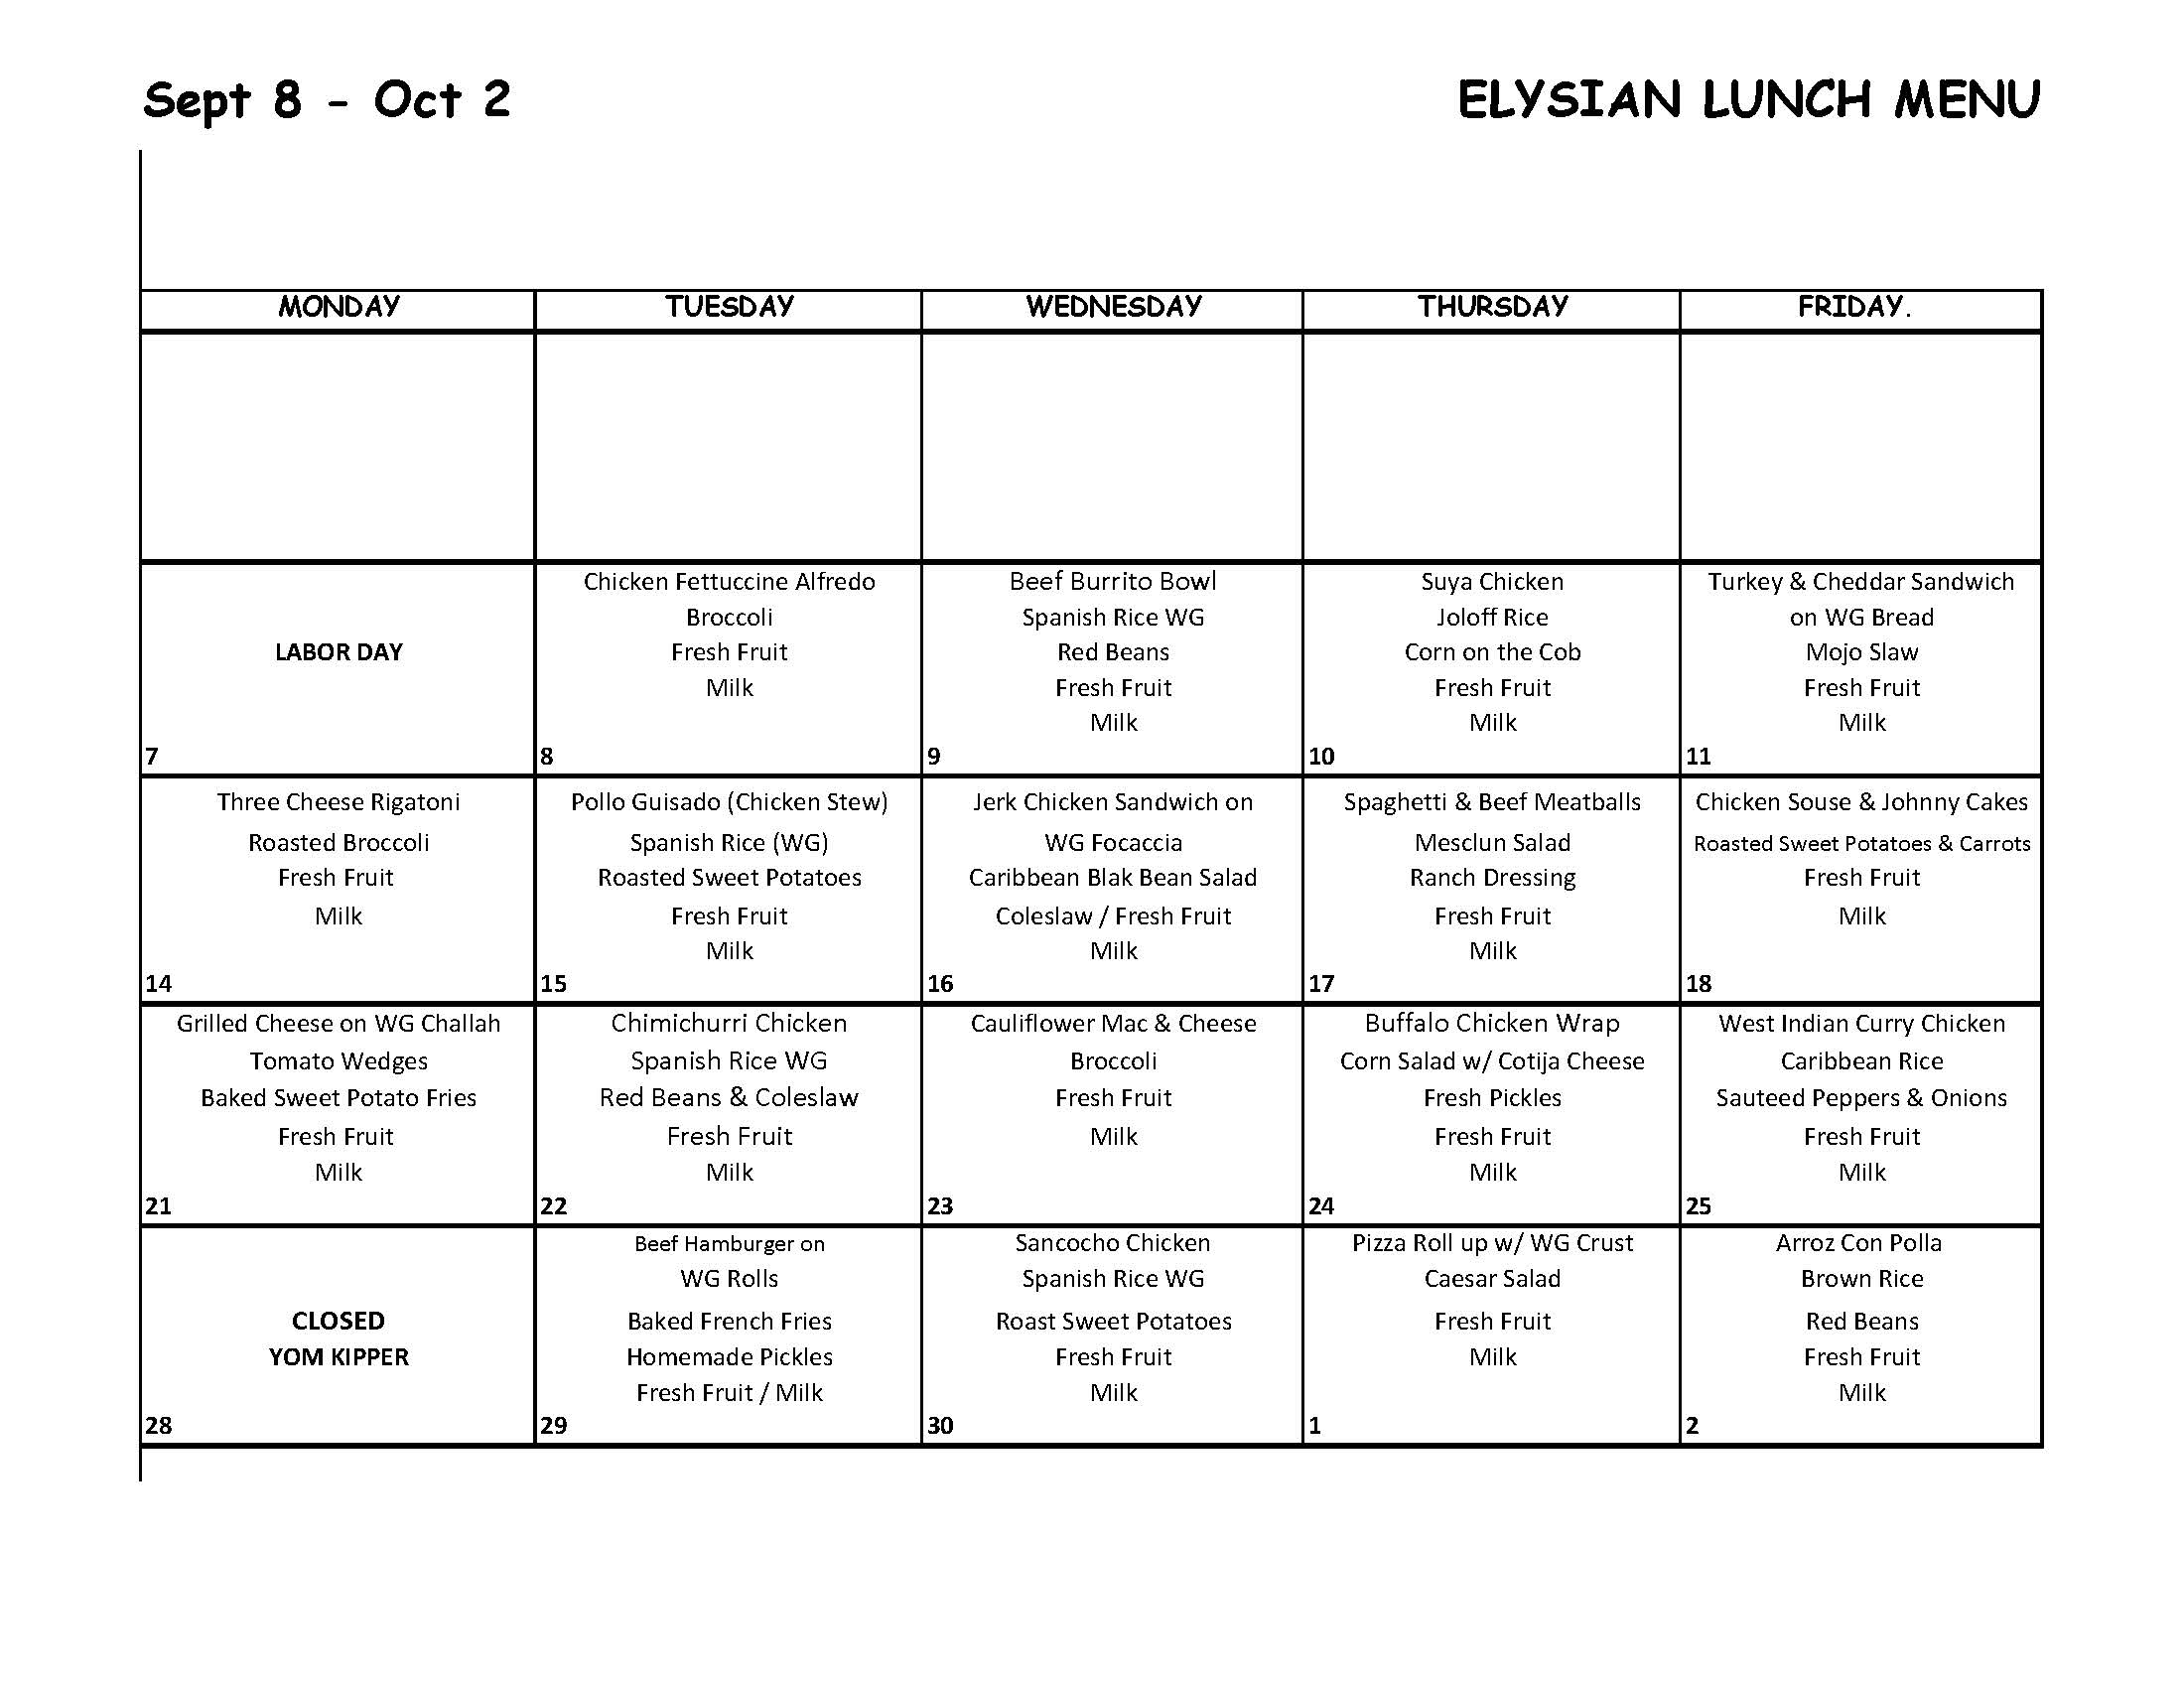 school lunch menu calendar